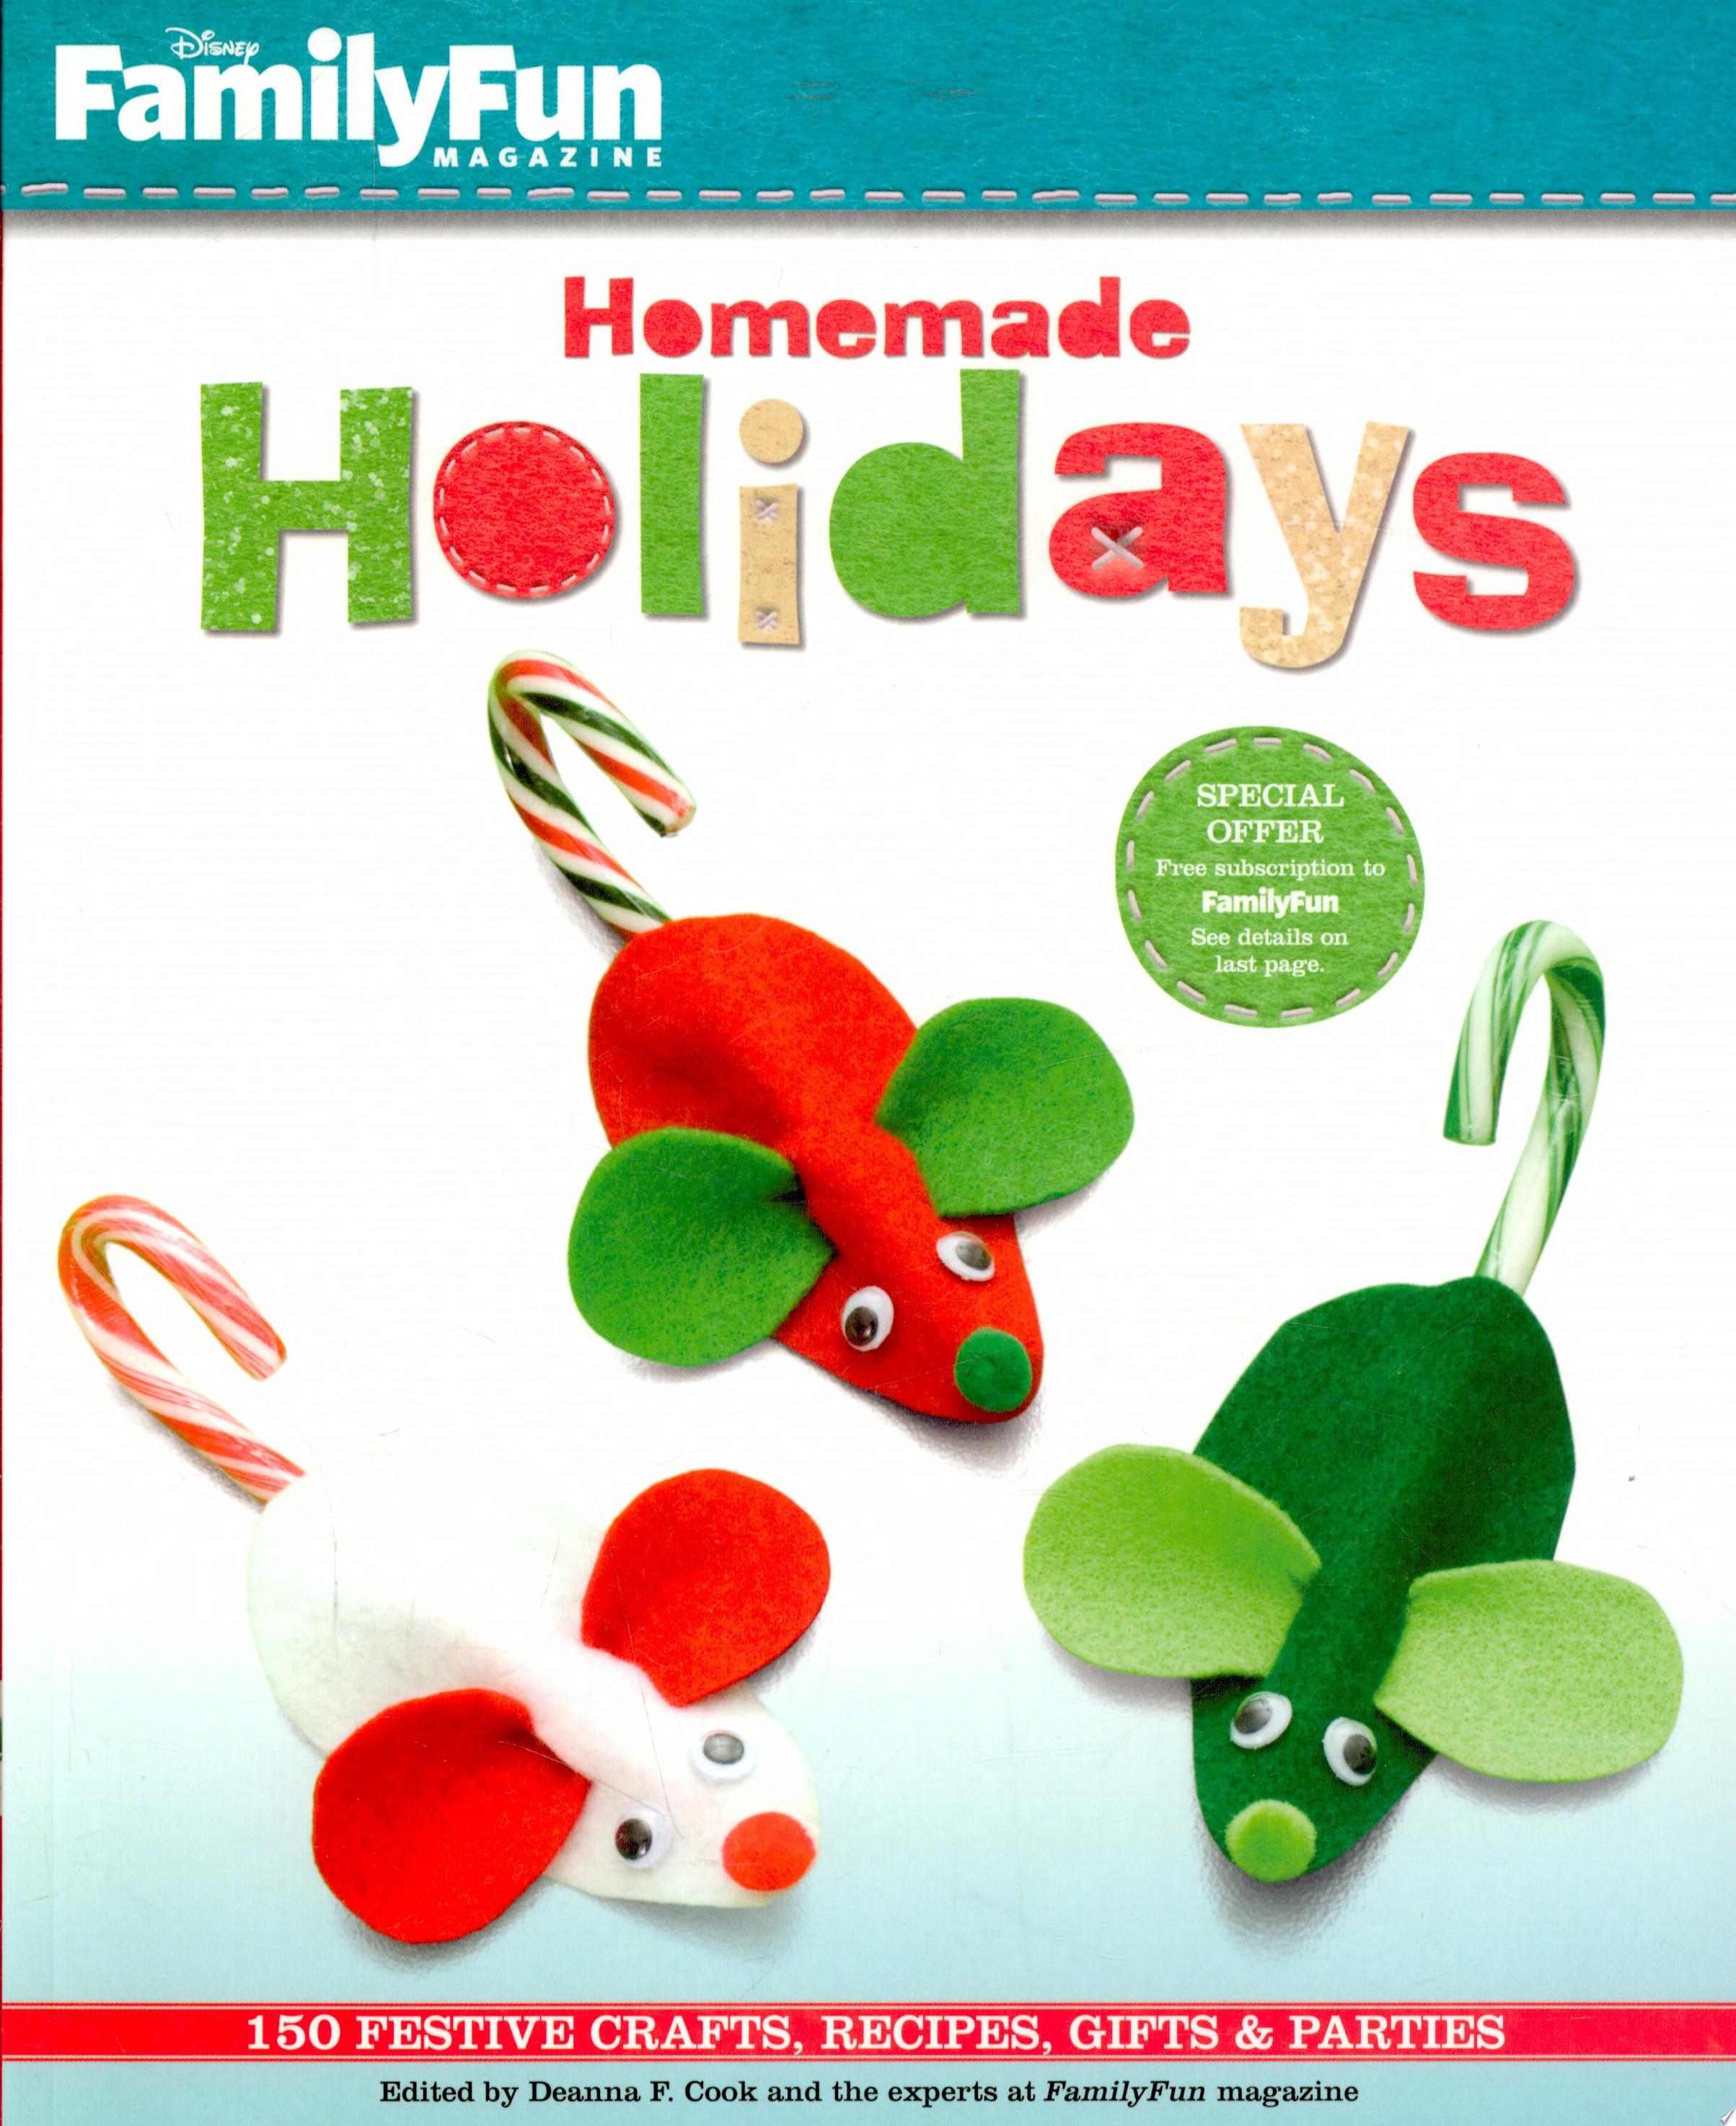 Image for "FamilyFun Homemade Holidays"